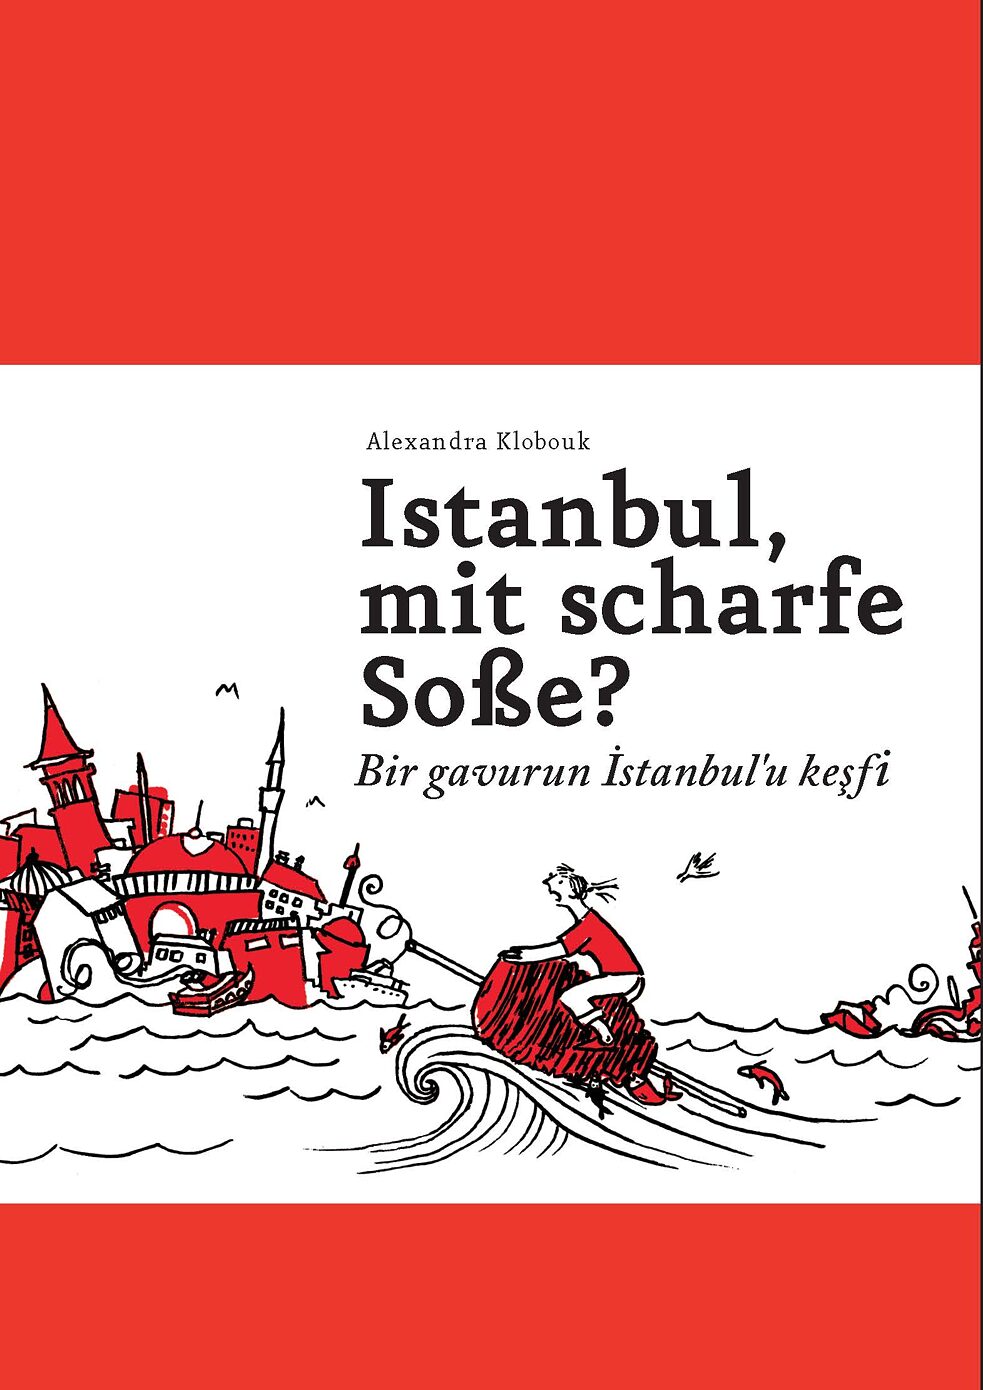 Alexandra Klobouk: Istanbul mit scharfe Soße | Cover